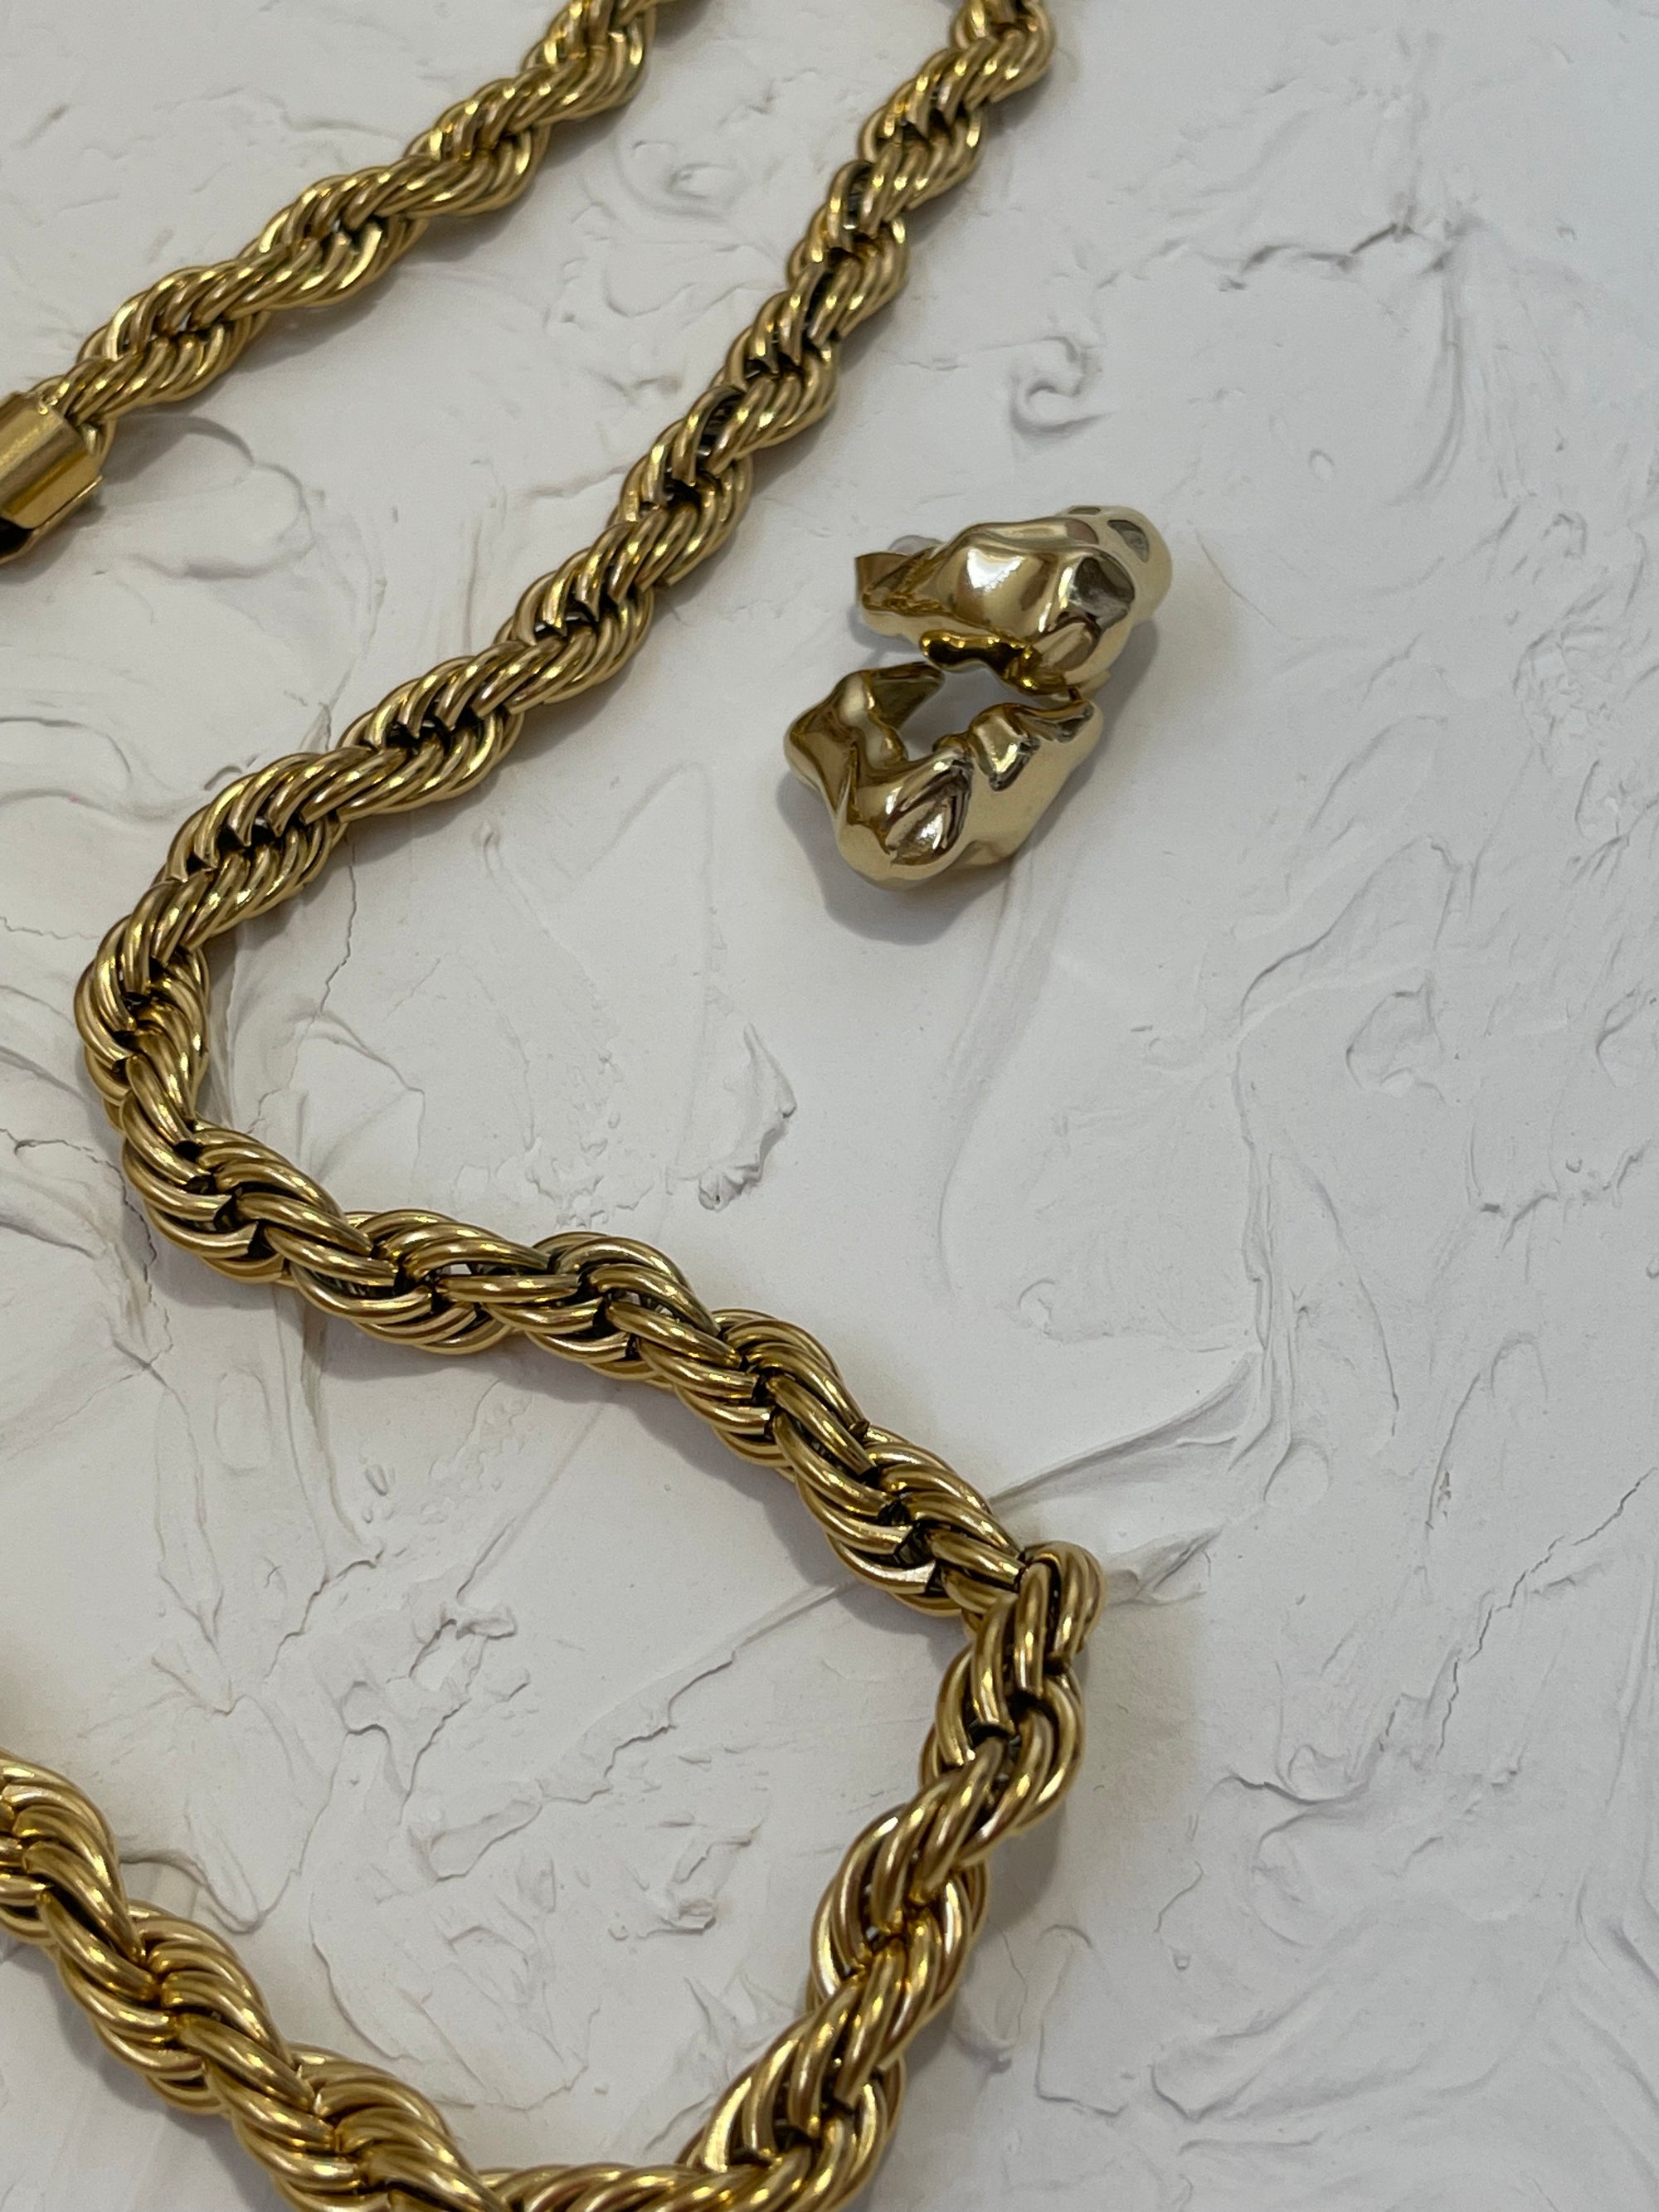 TWISTY CHAIN GOLD NECKLACE - Lynott Jewellery